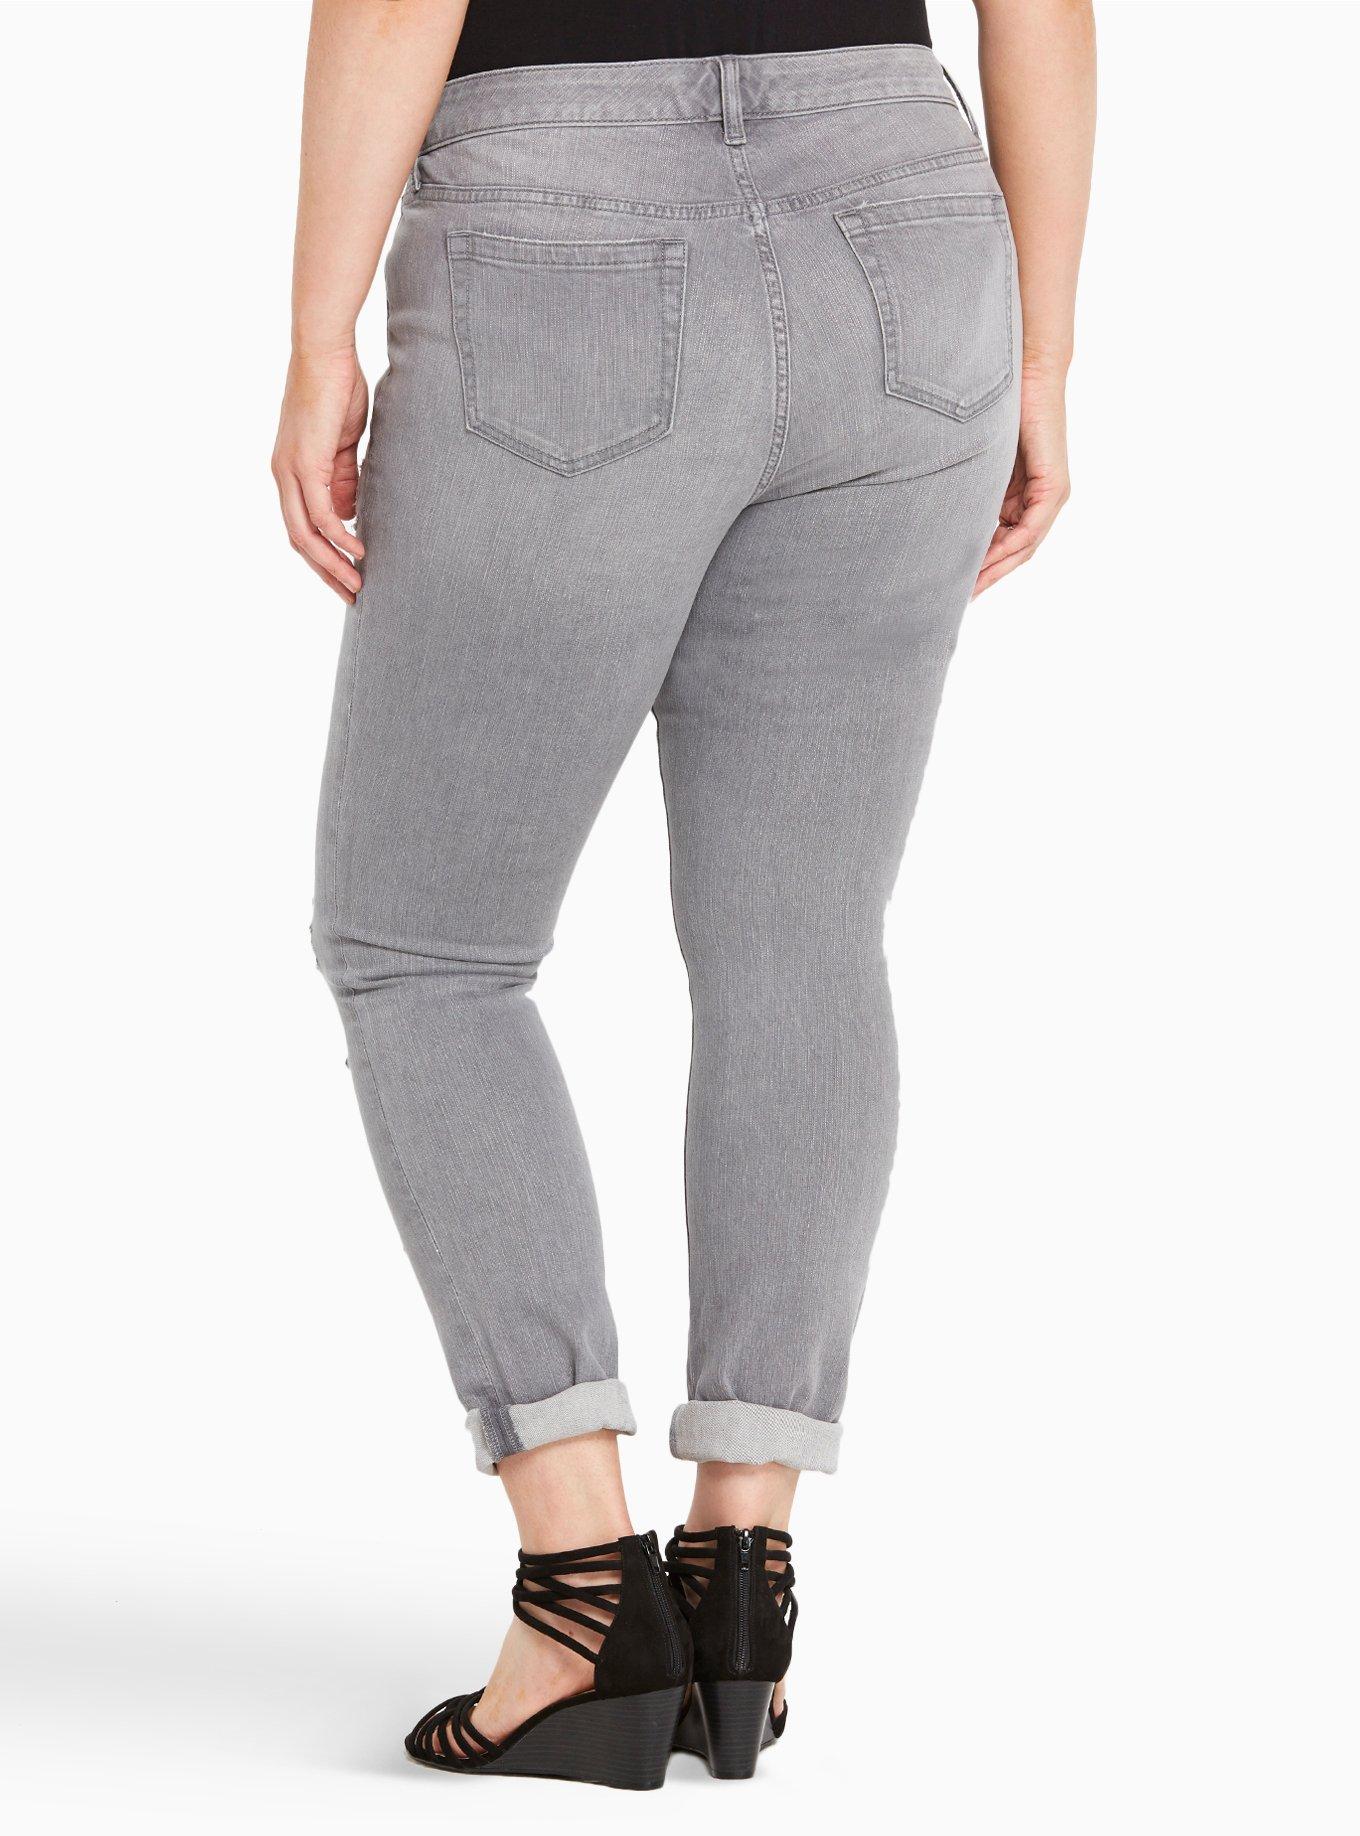 Plus Size - Torrid Skinny Jeans - Grey Wash with Destruction - Torrid